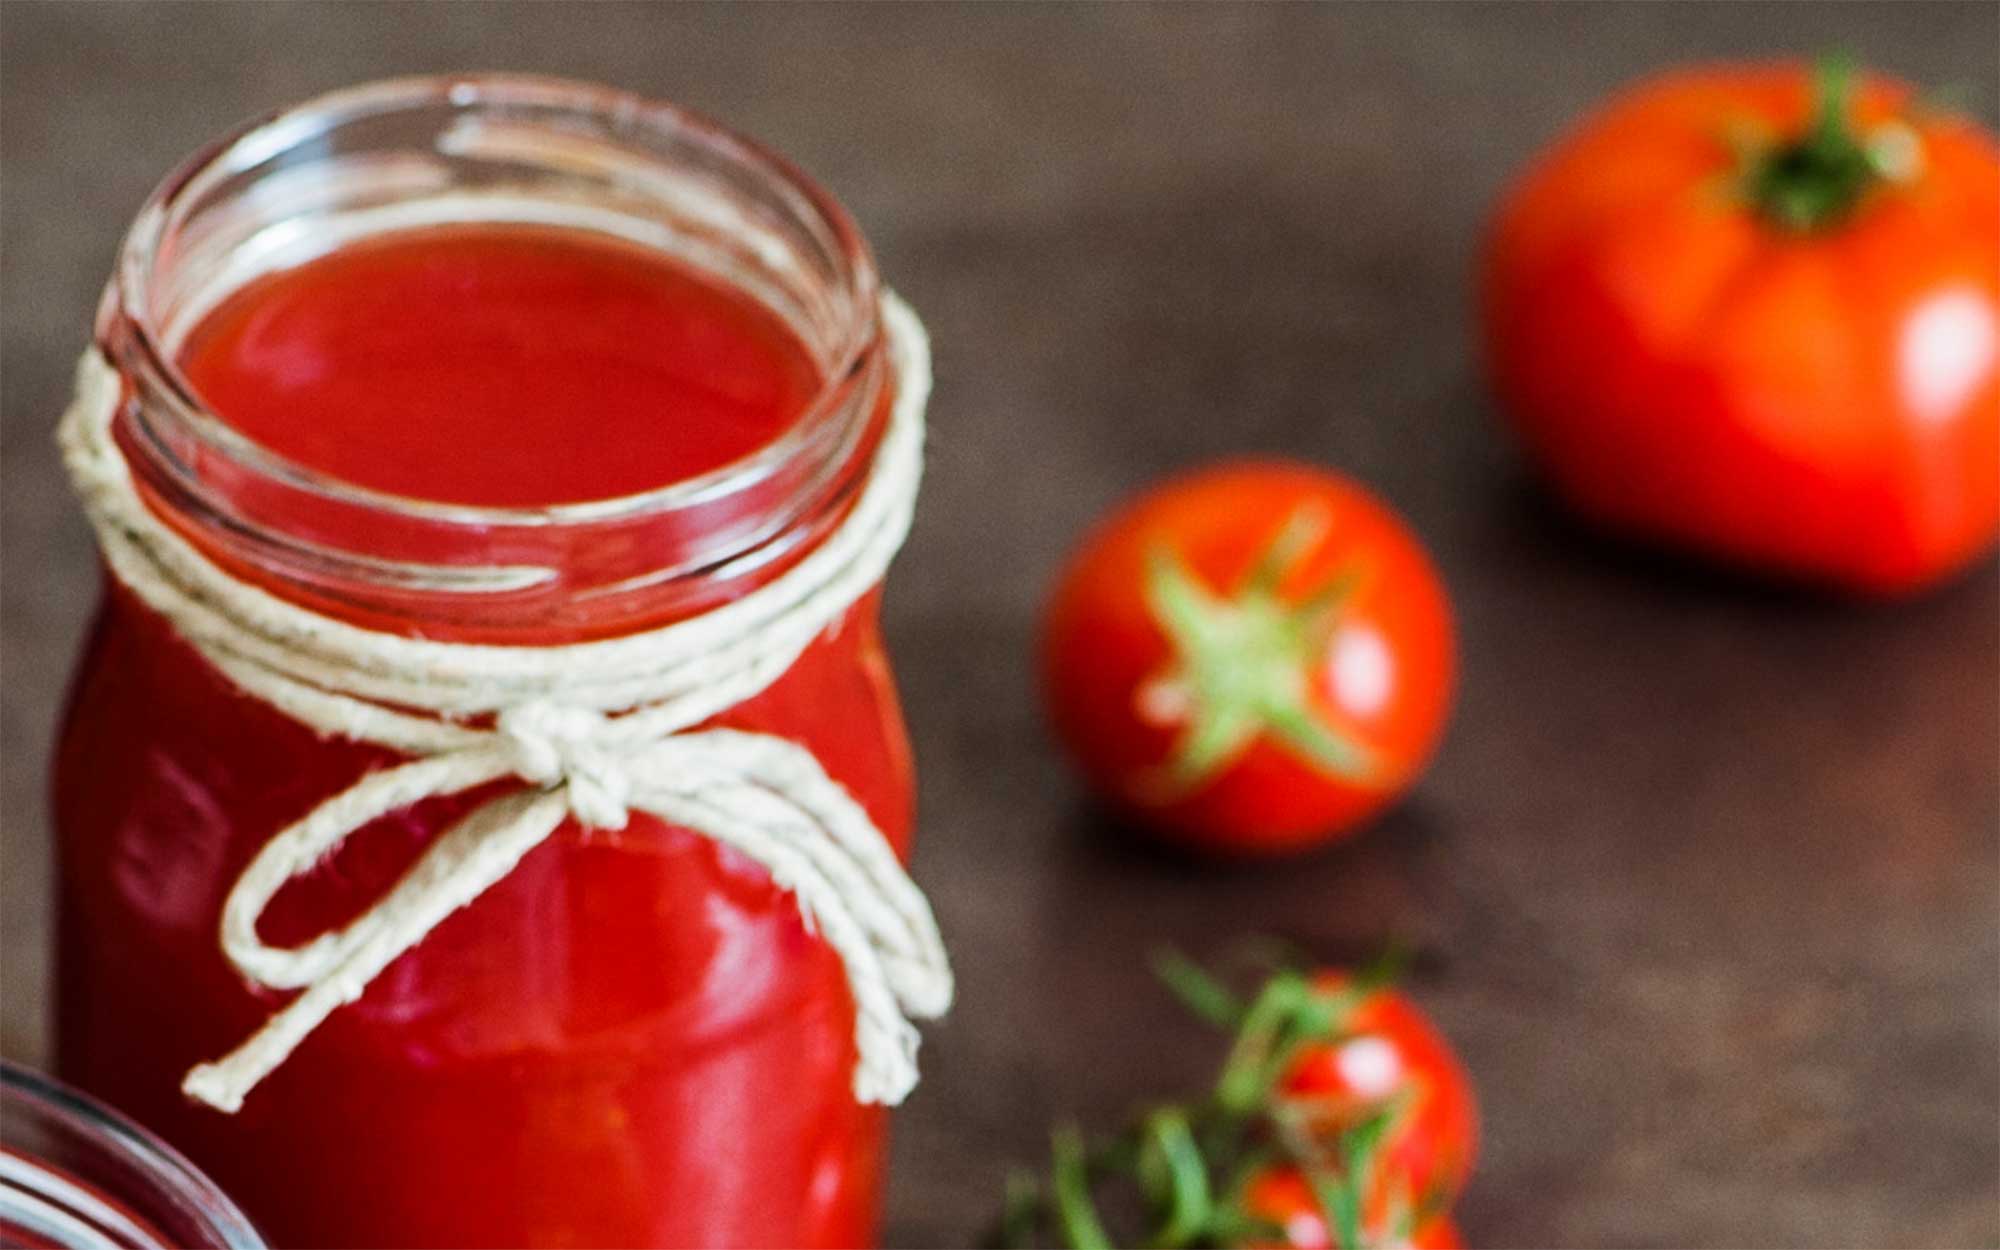 Fresh tomatoes near a jar of tomato juice.